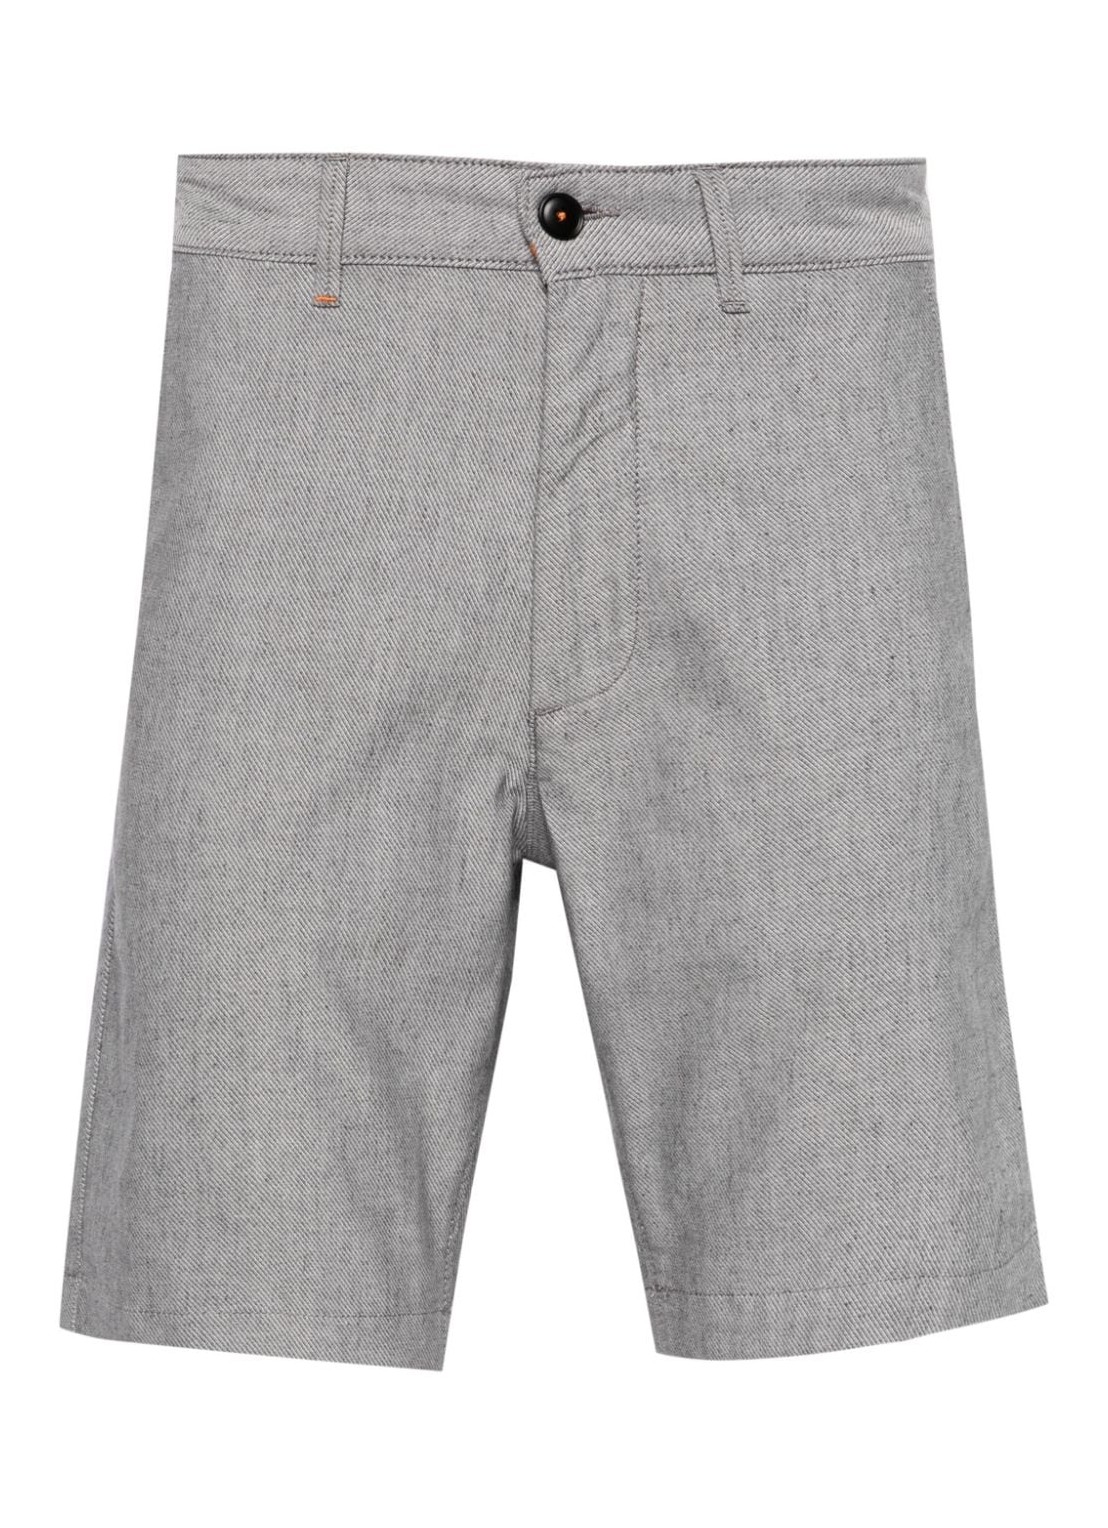 Pantalon corto boss short pant manchino-slim-shorts - 50513017 415 talla gris
 